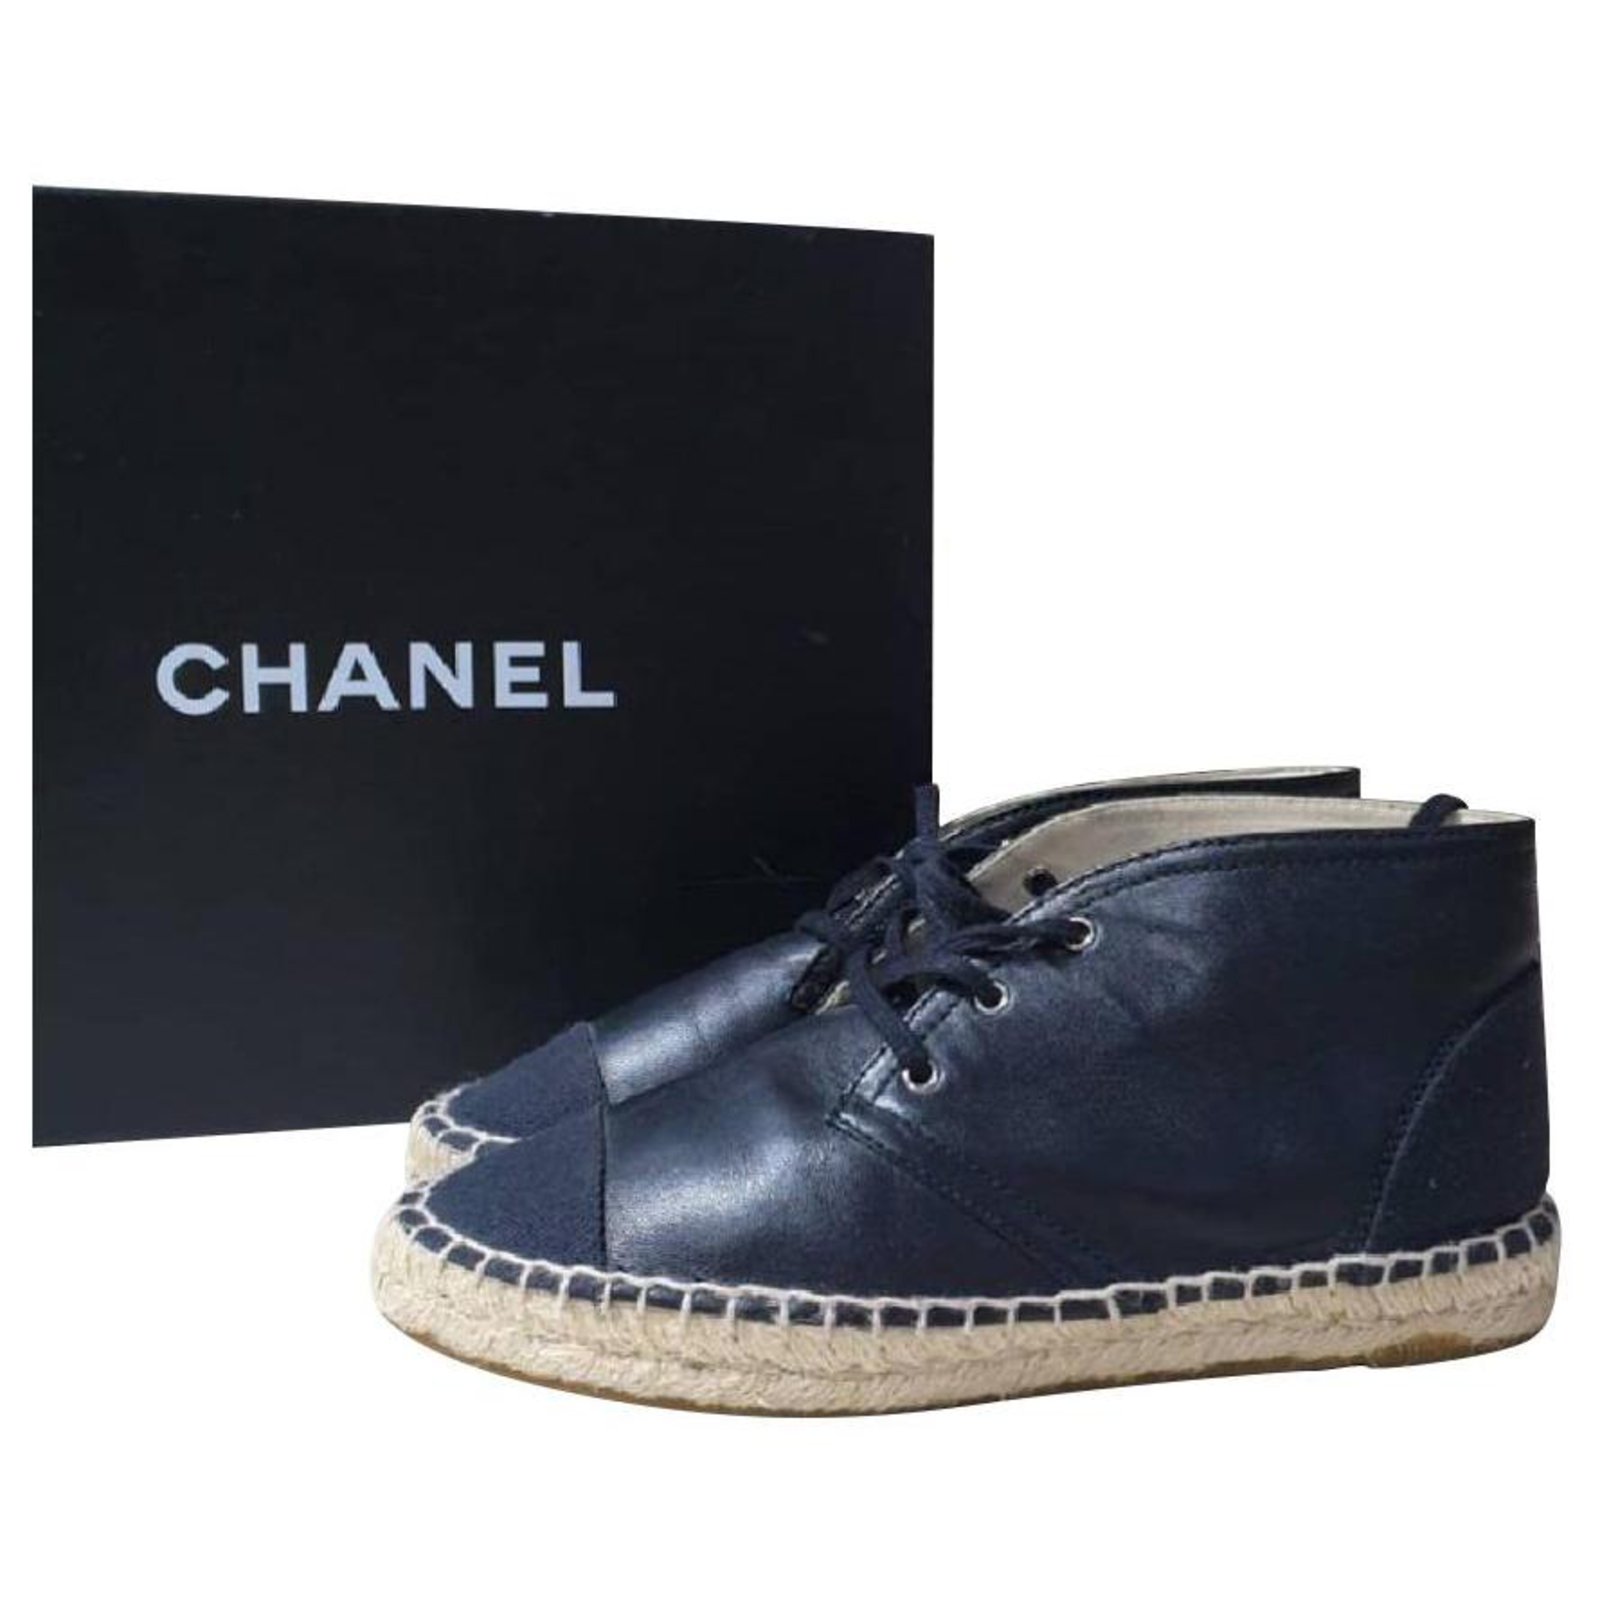 Chanel Espadrilles Pearl White/black CC logo Shoes Size 37